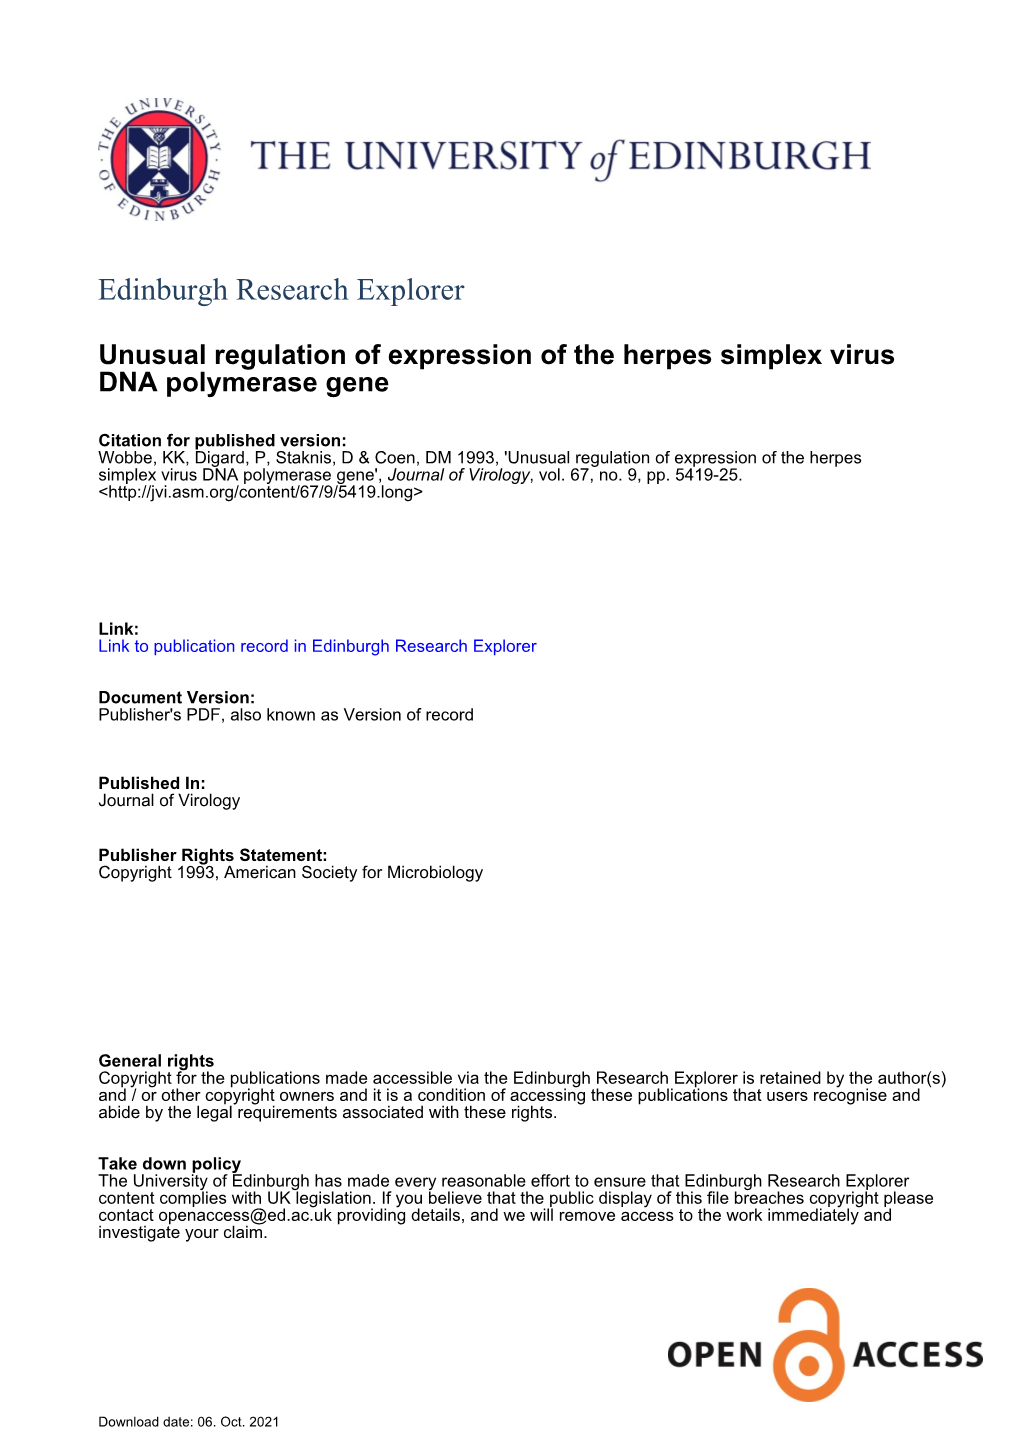 Unusual Regulation of Expression of the Herpes Simplex Virus DNA Polymerase Gene', Journal of Virology, Vol